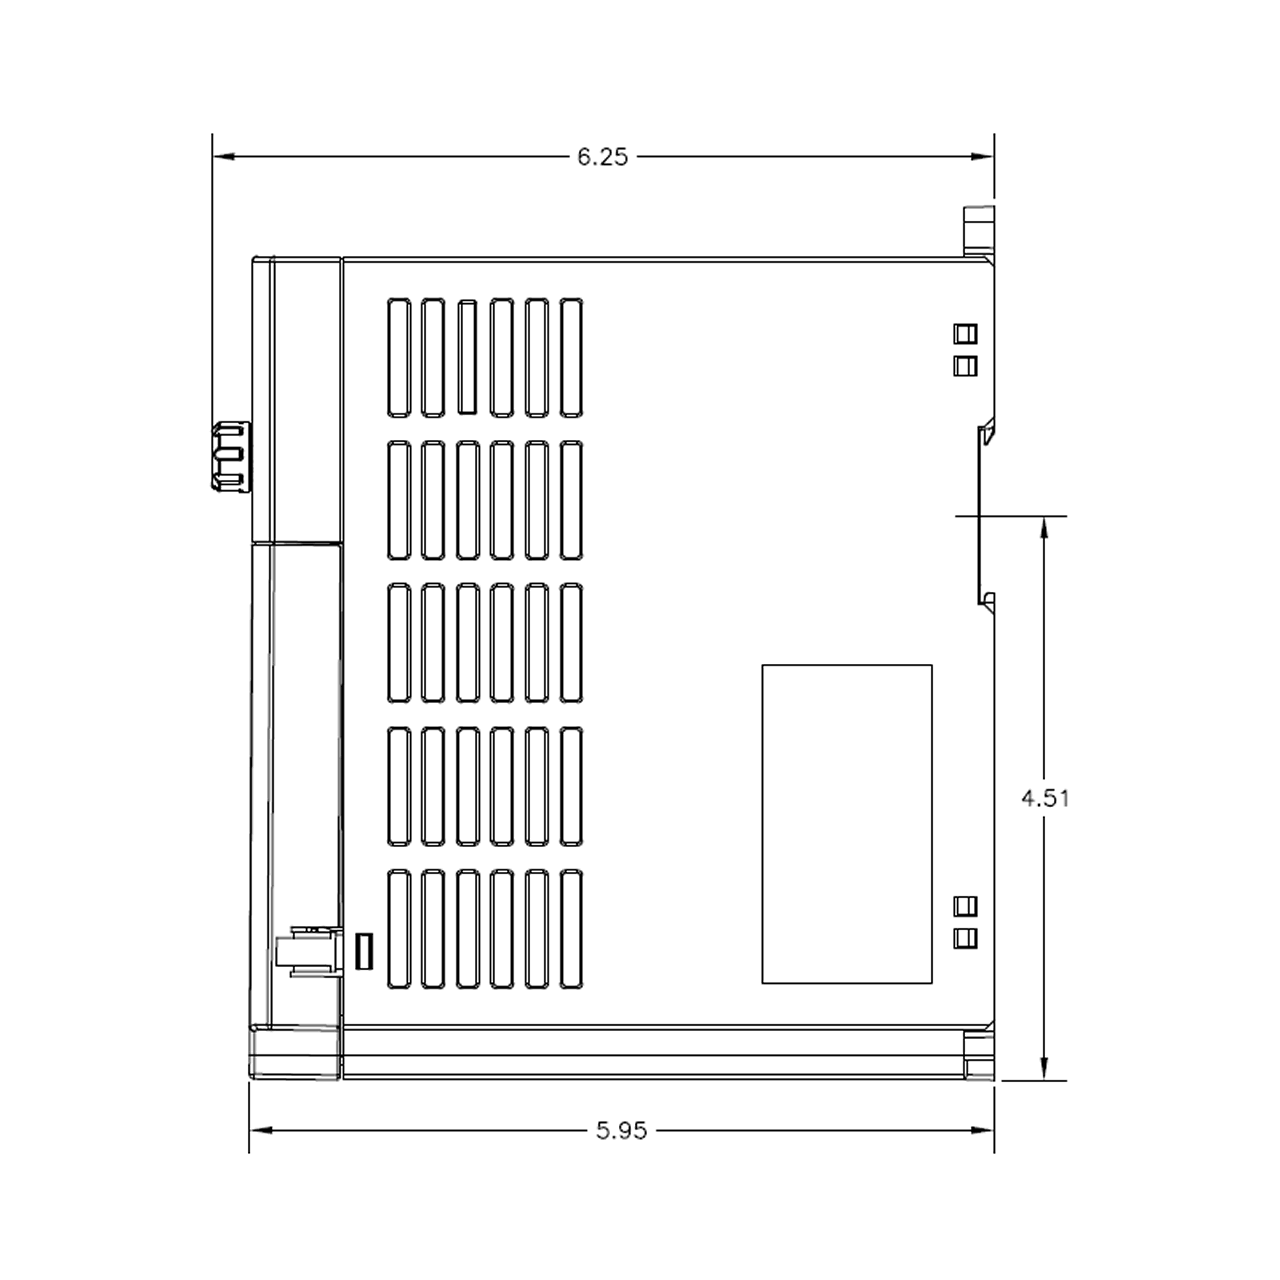 Benshaw RSI-003-GM2-4C side dimensions